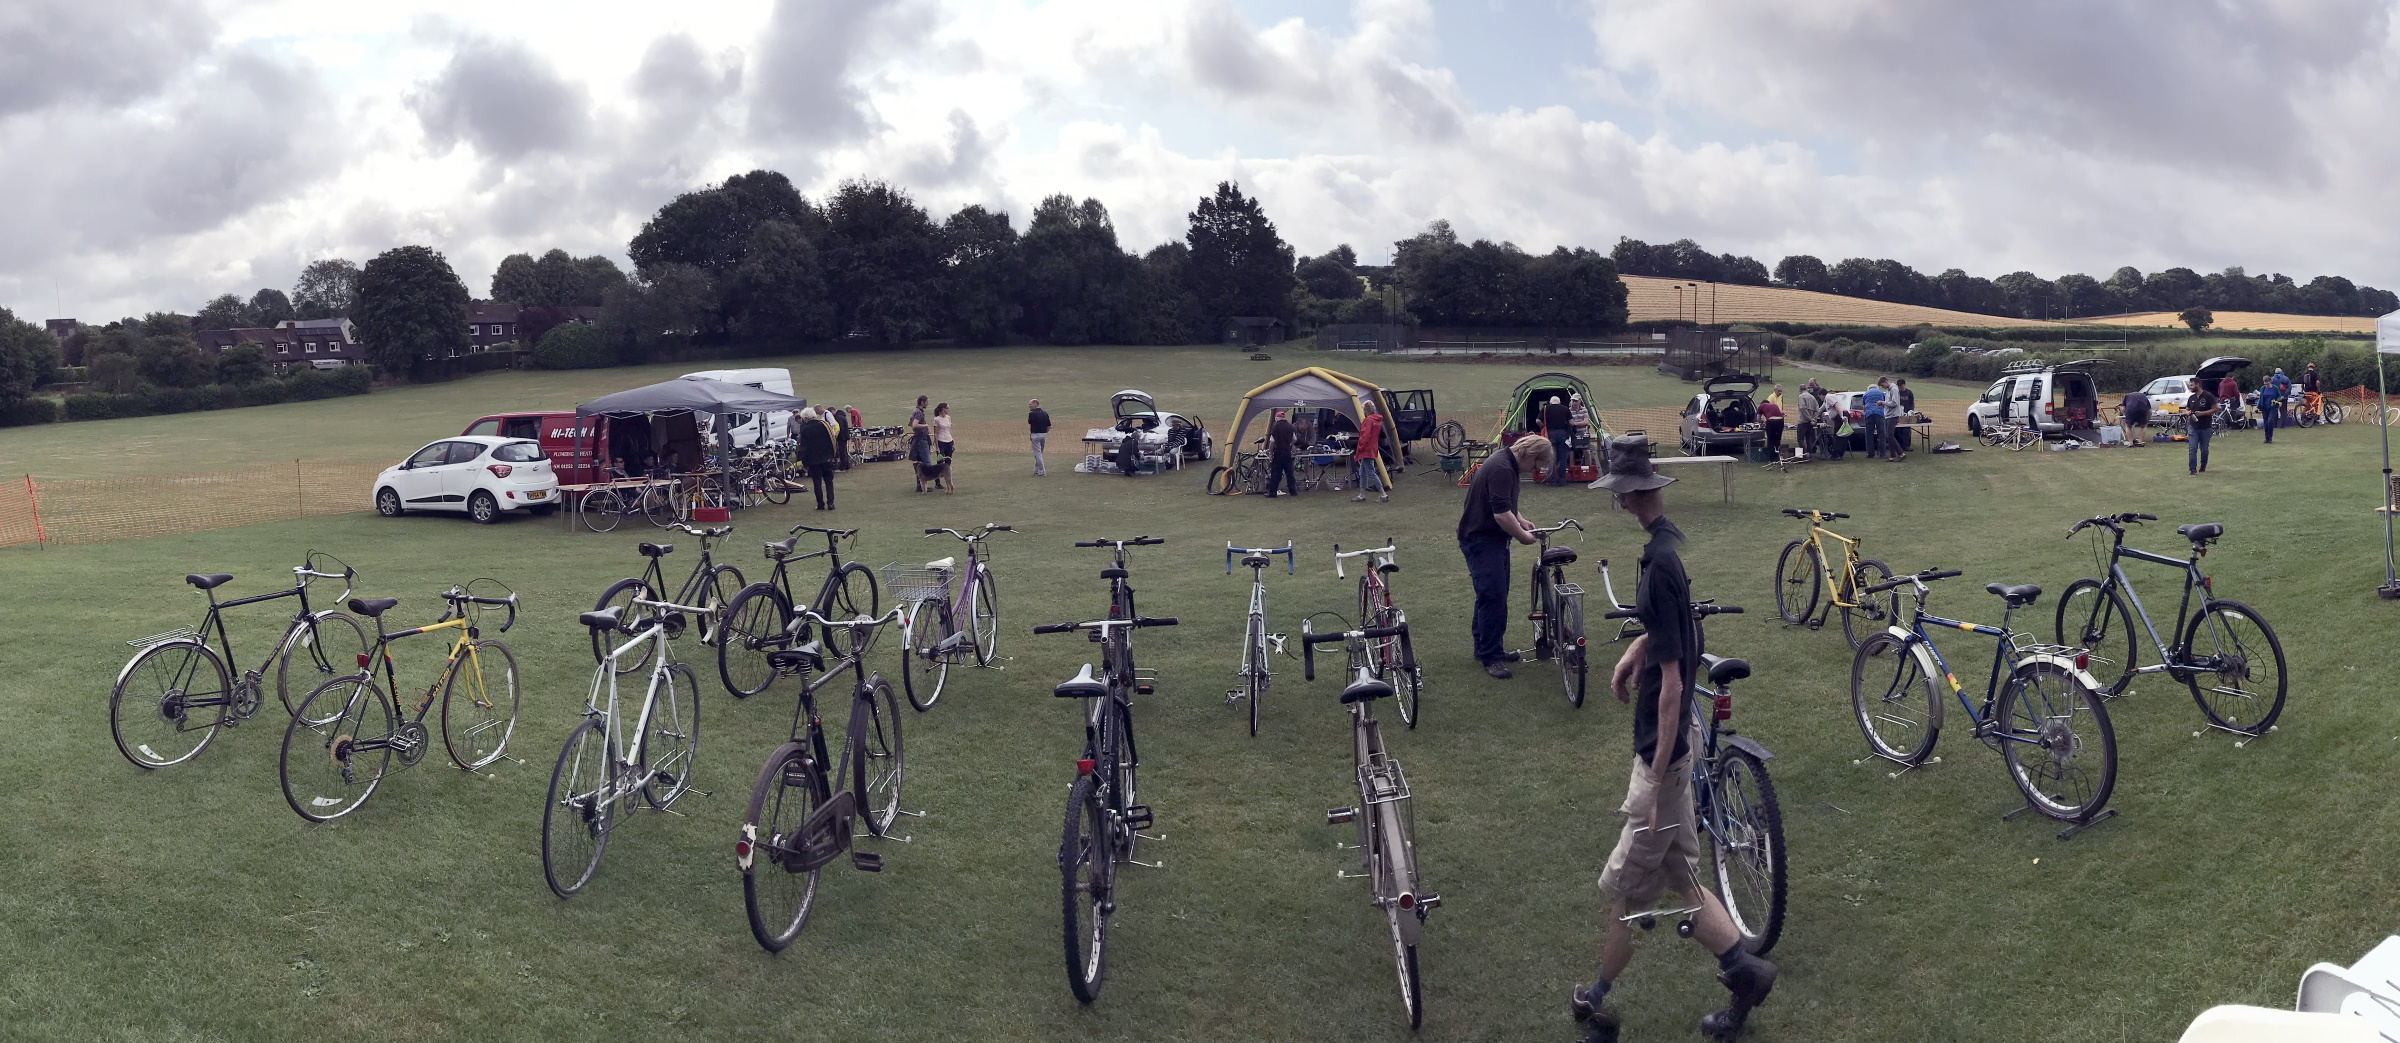 Cycle Jumble July 2019 at Cheriton Recreation Ground 